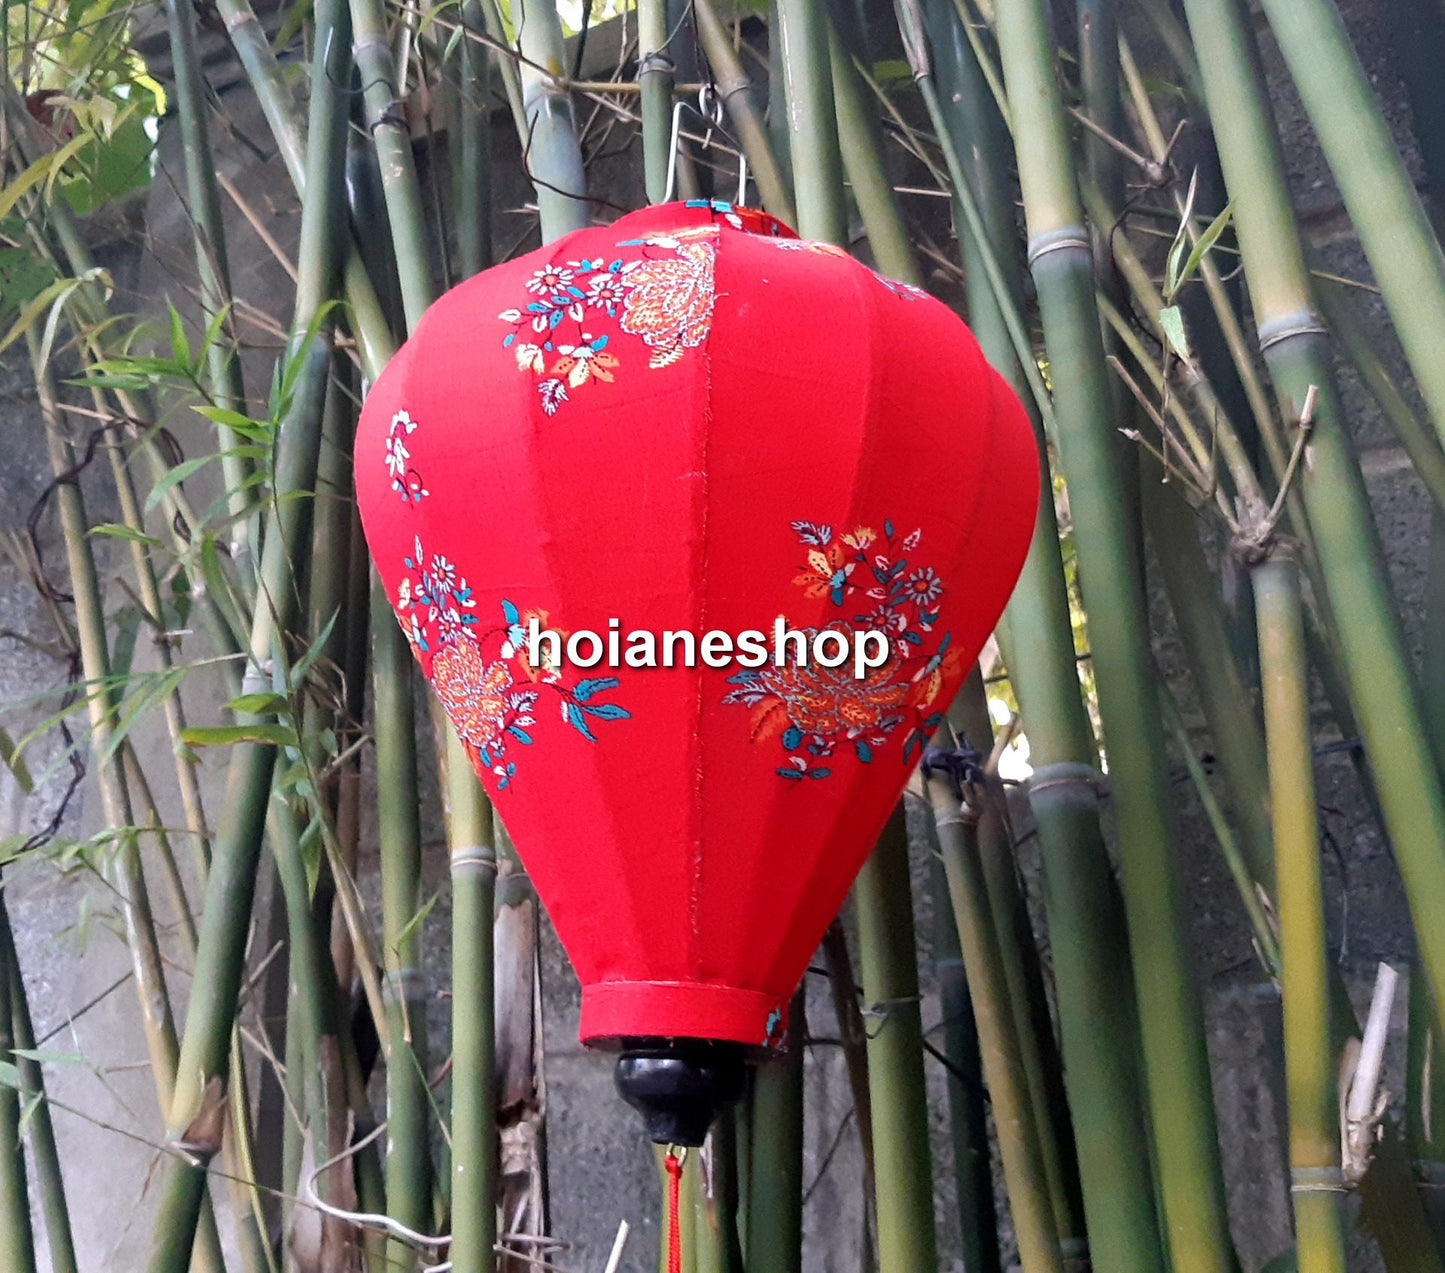 Set 16 pcs of 40cm Vietnam silk lanterns with flower printing on fabric - Hoi An lanterns for Wedding party decor Christmas tree decor